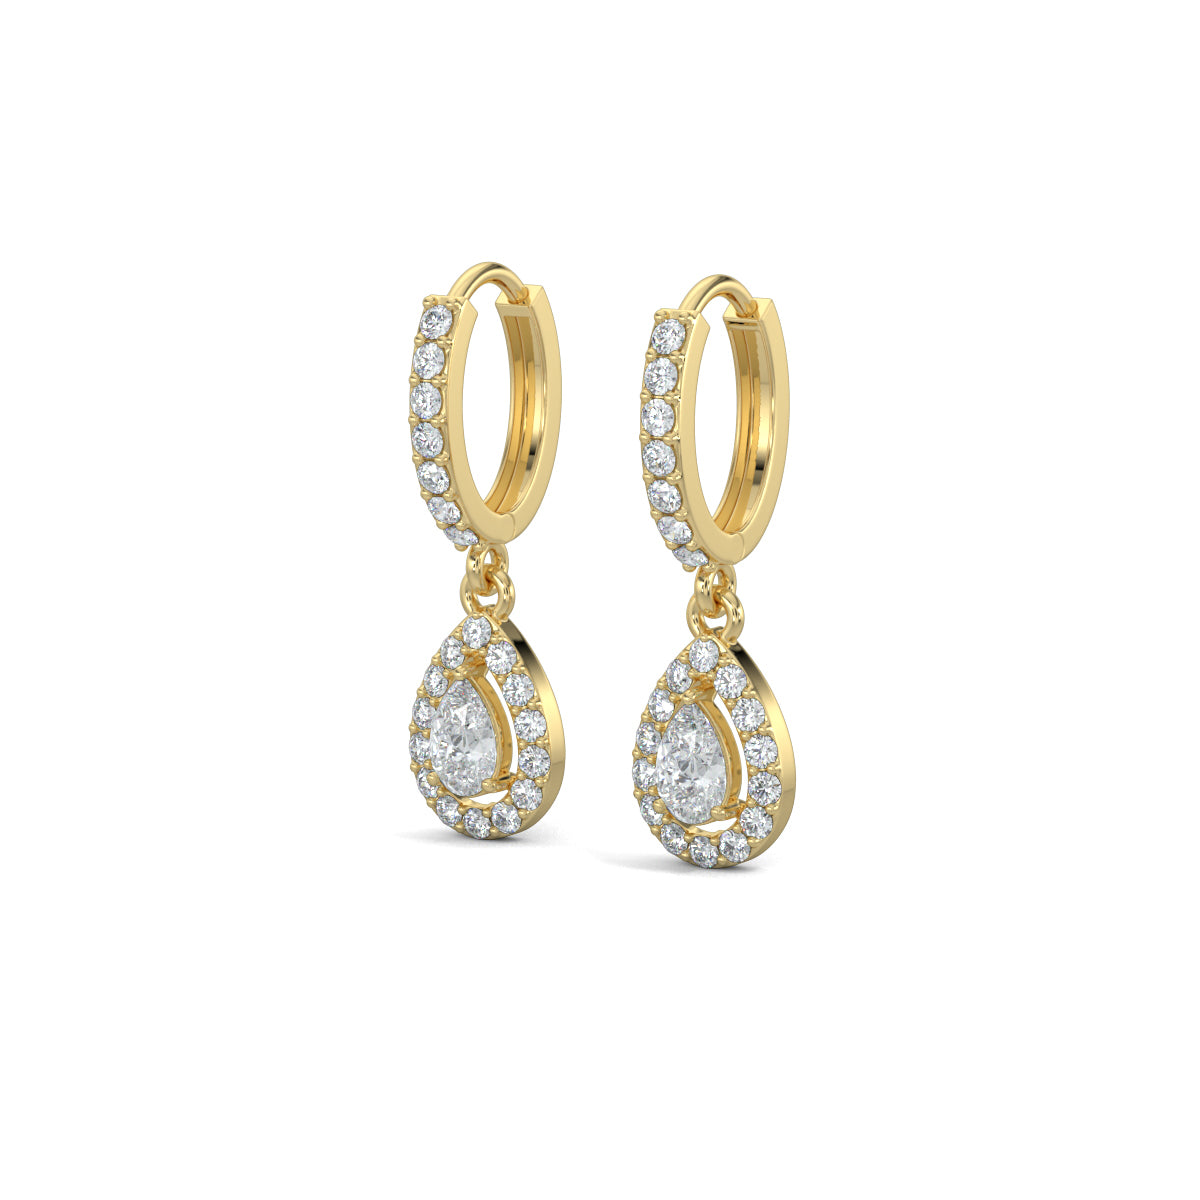 Yellow Gold, Natural diamond dangler earrings, Lab-grown diamond dangler earrings, pave setting, round diamonds, pear diamond, halo setting, modern jewelry, elegant earrings.